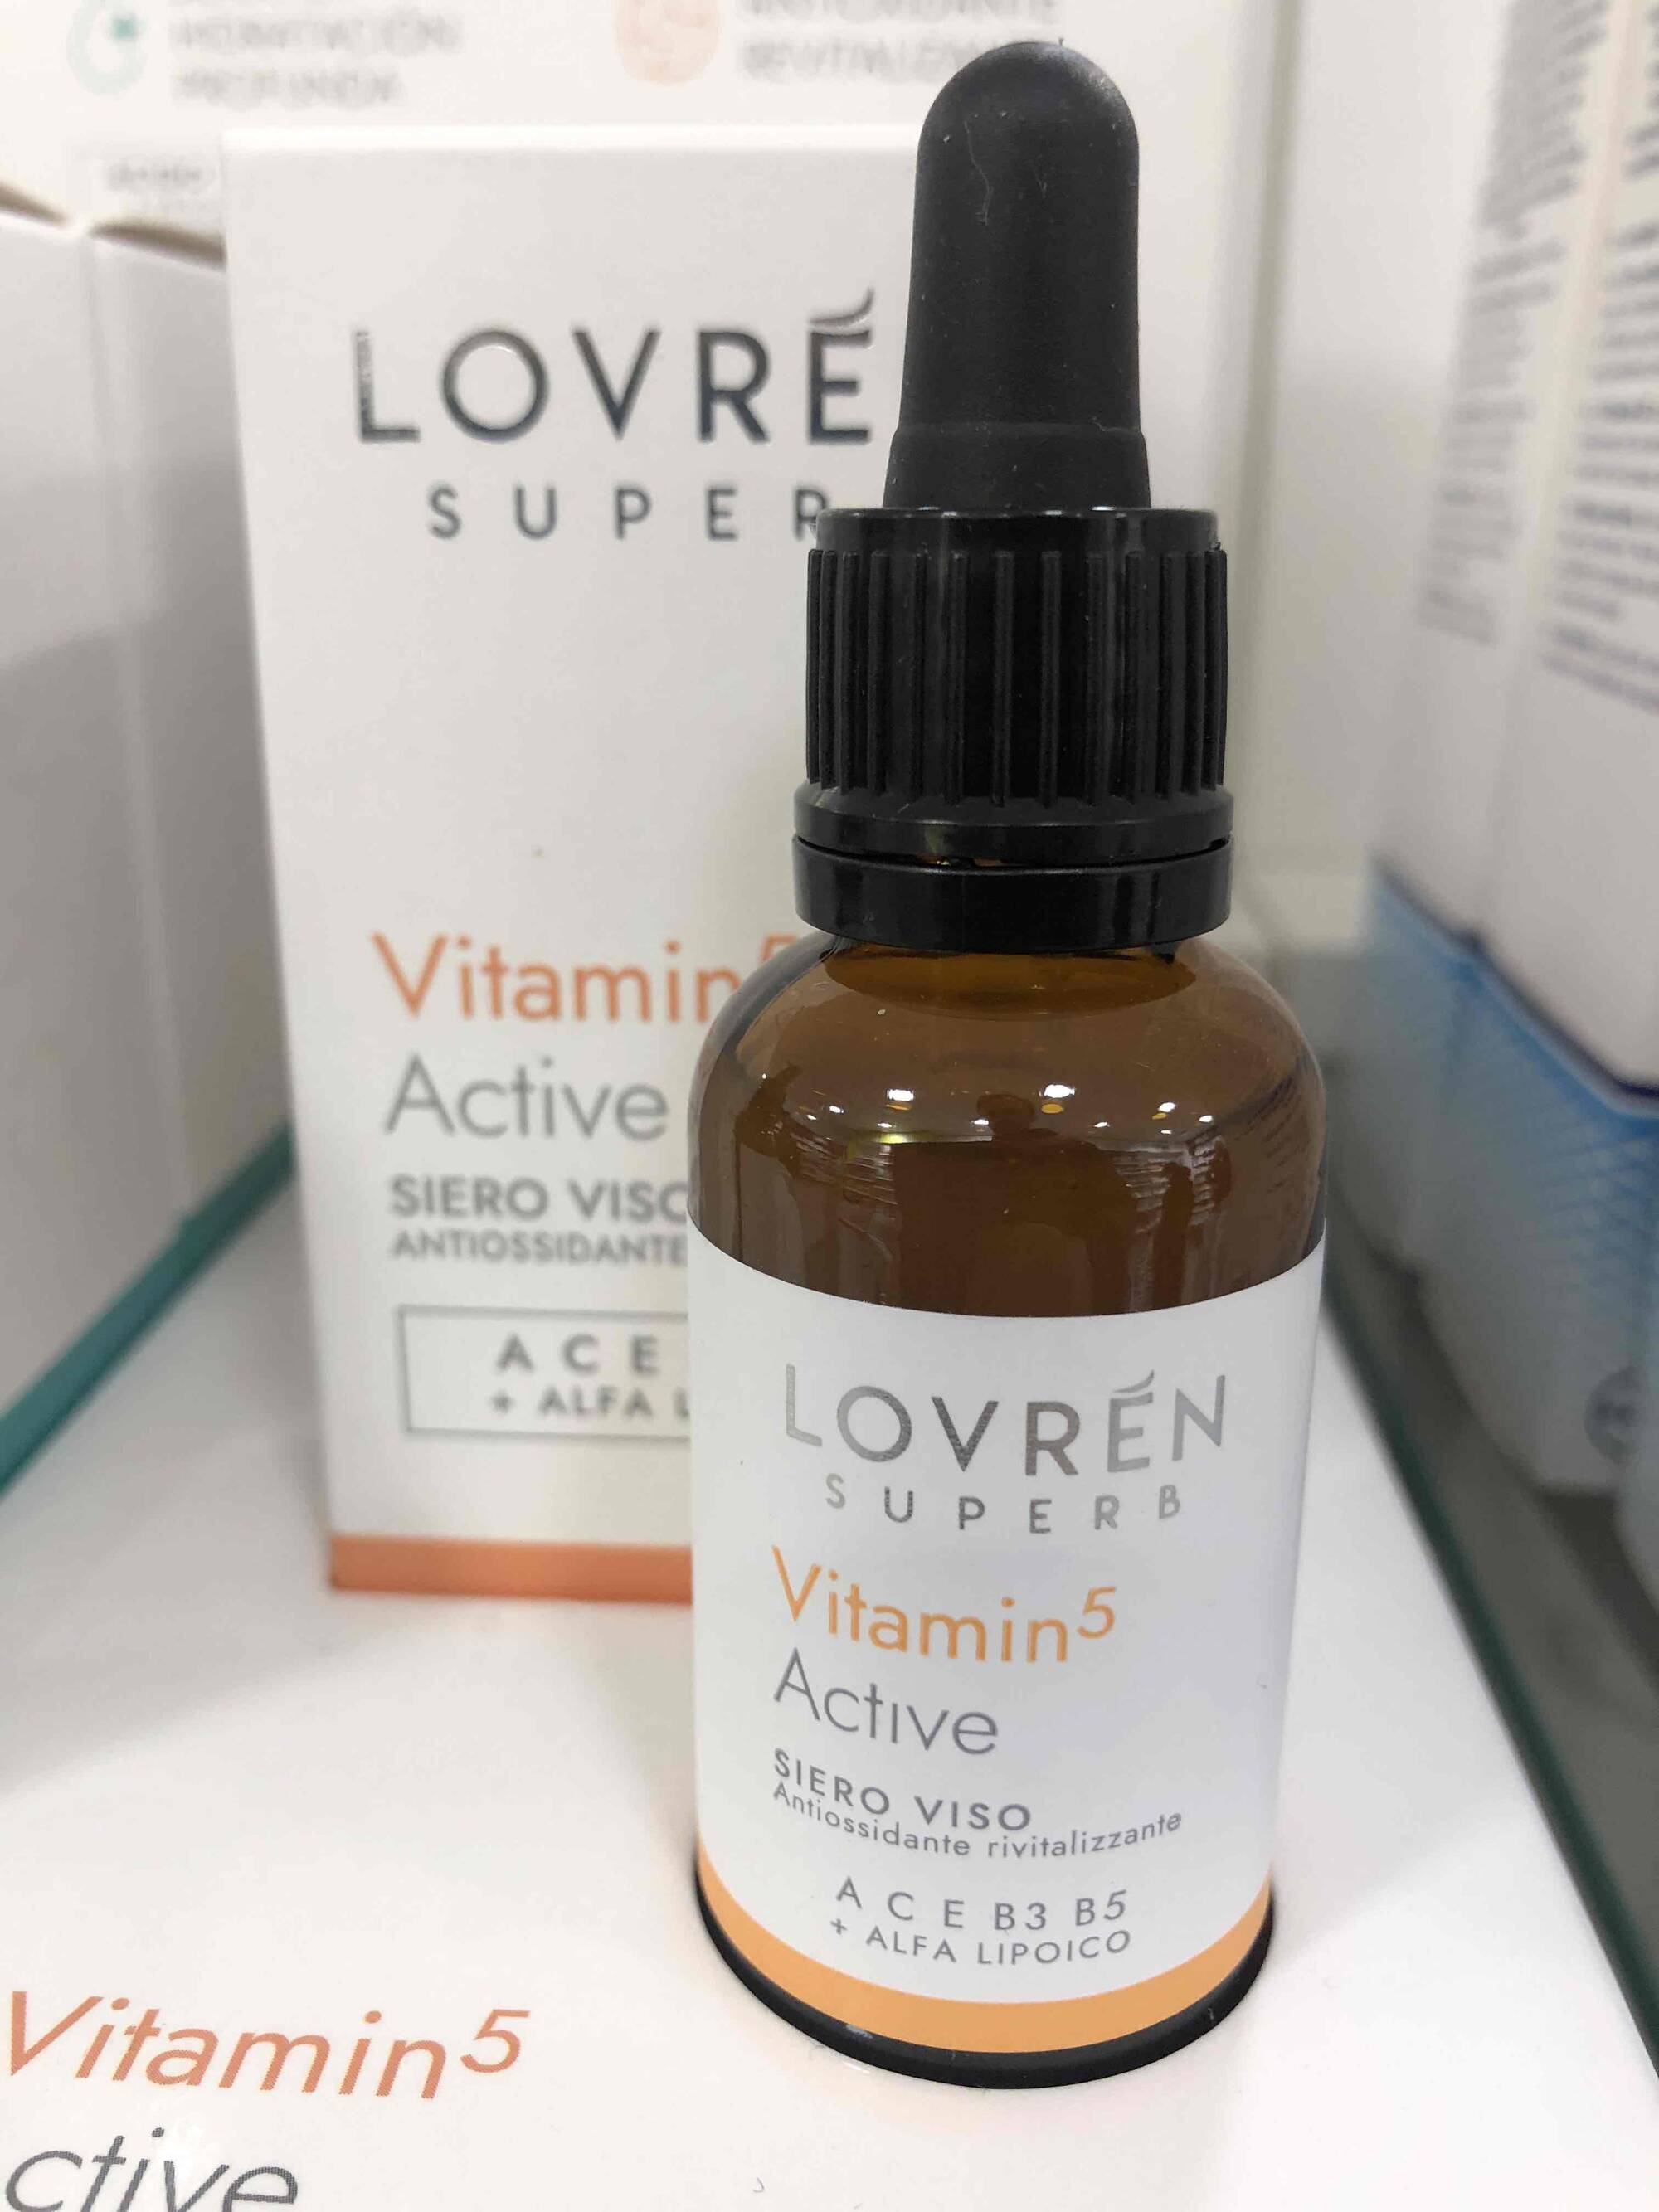 LOVREN - Vitamin 5 active - Siero viso